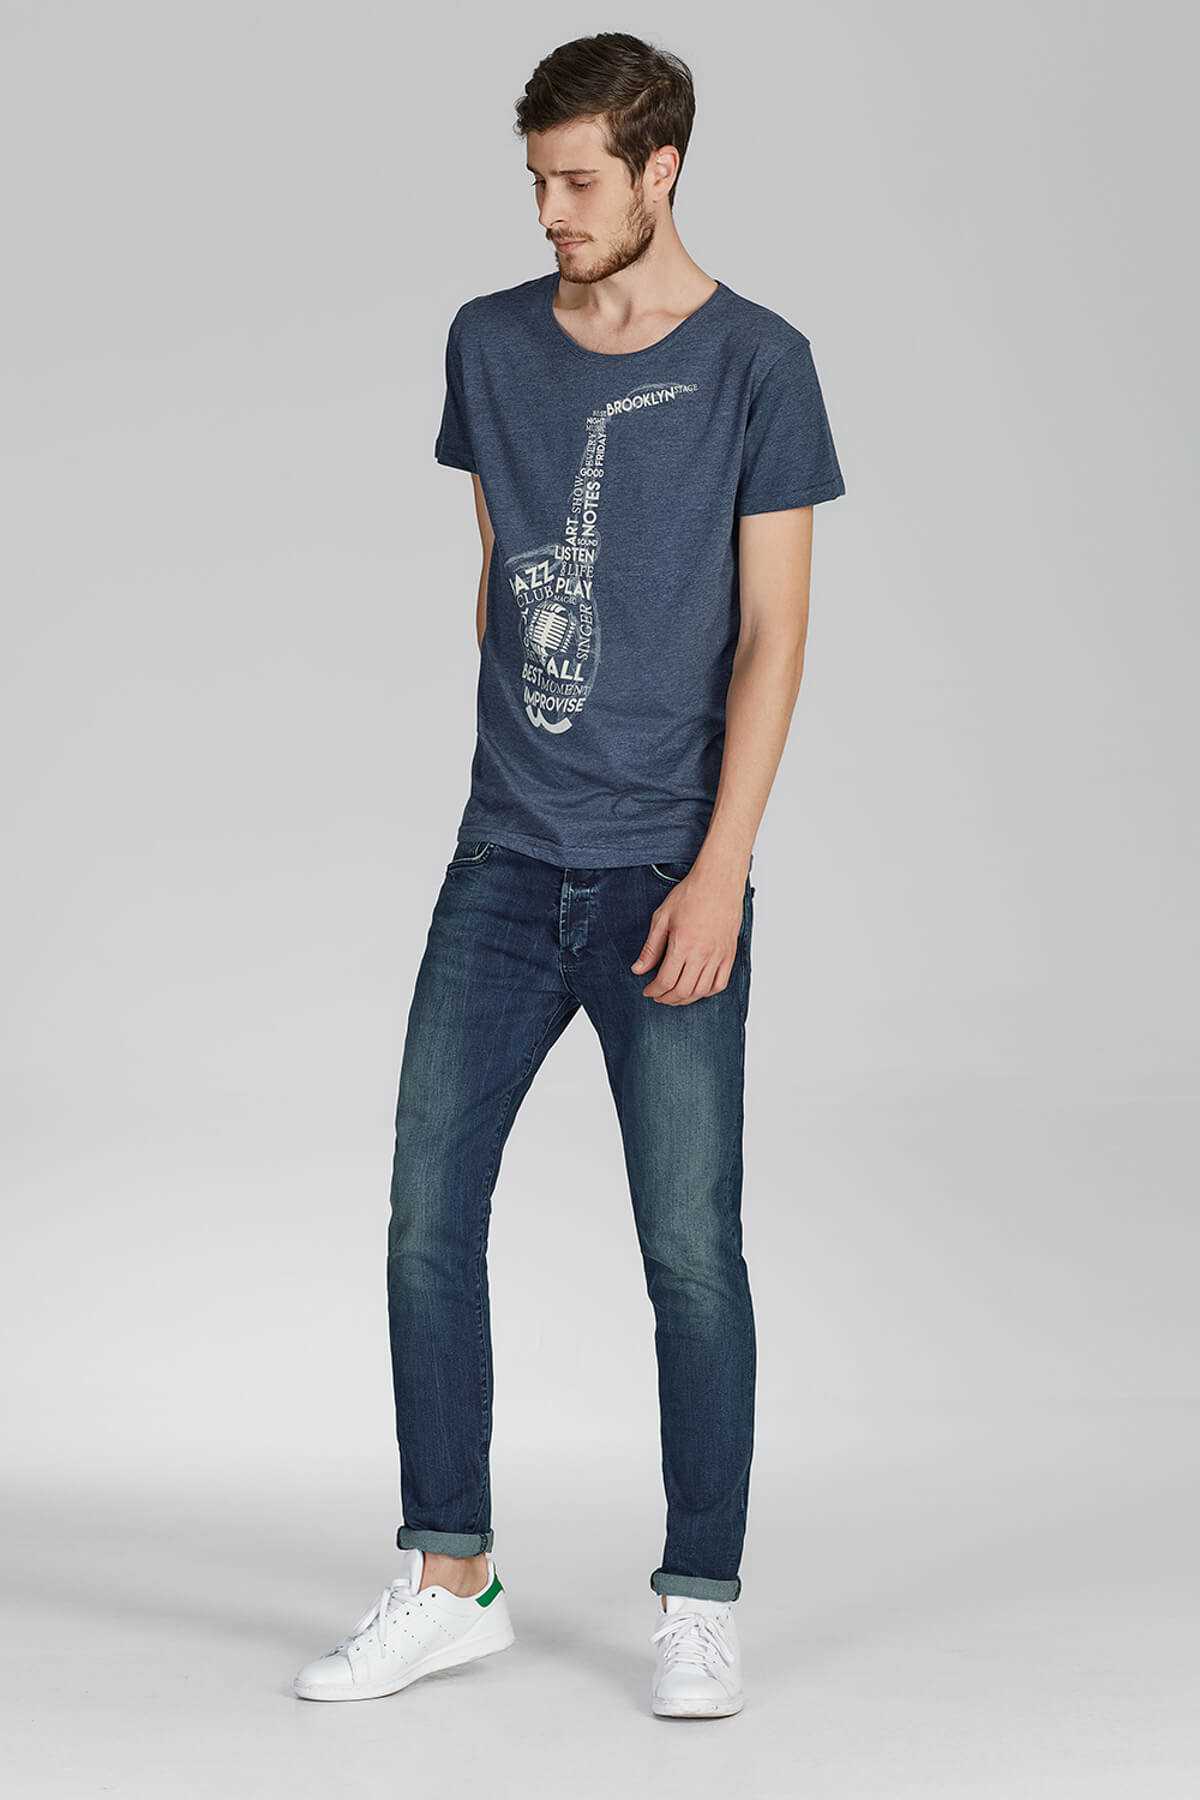 فروش پستی ست شلوار جین مردانه برند Ltb رنگ لاجوردی کد ty2447319